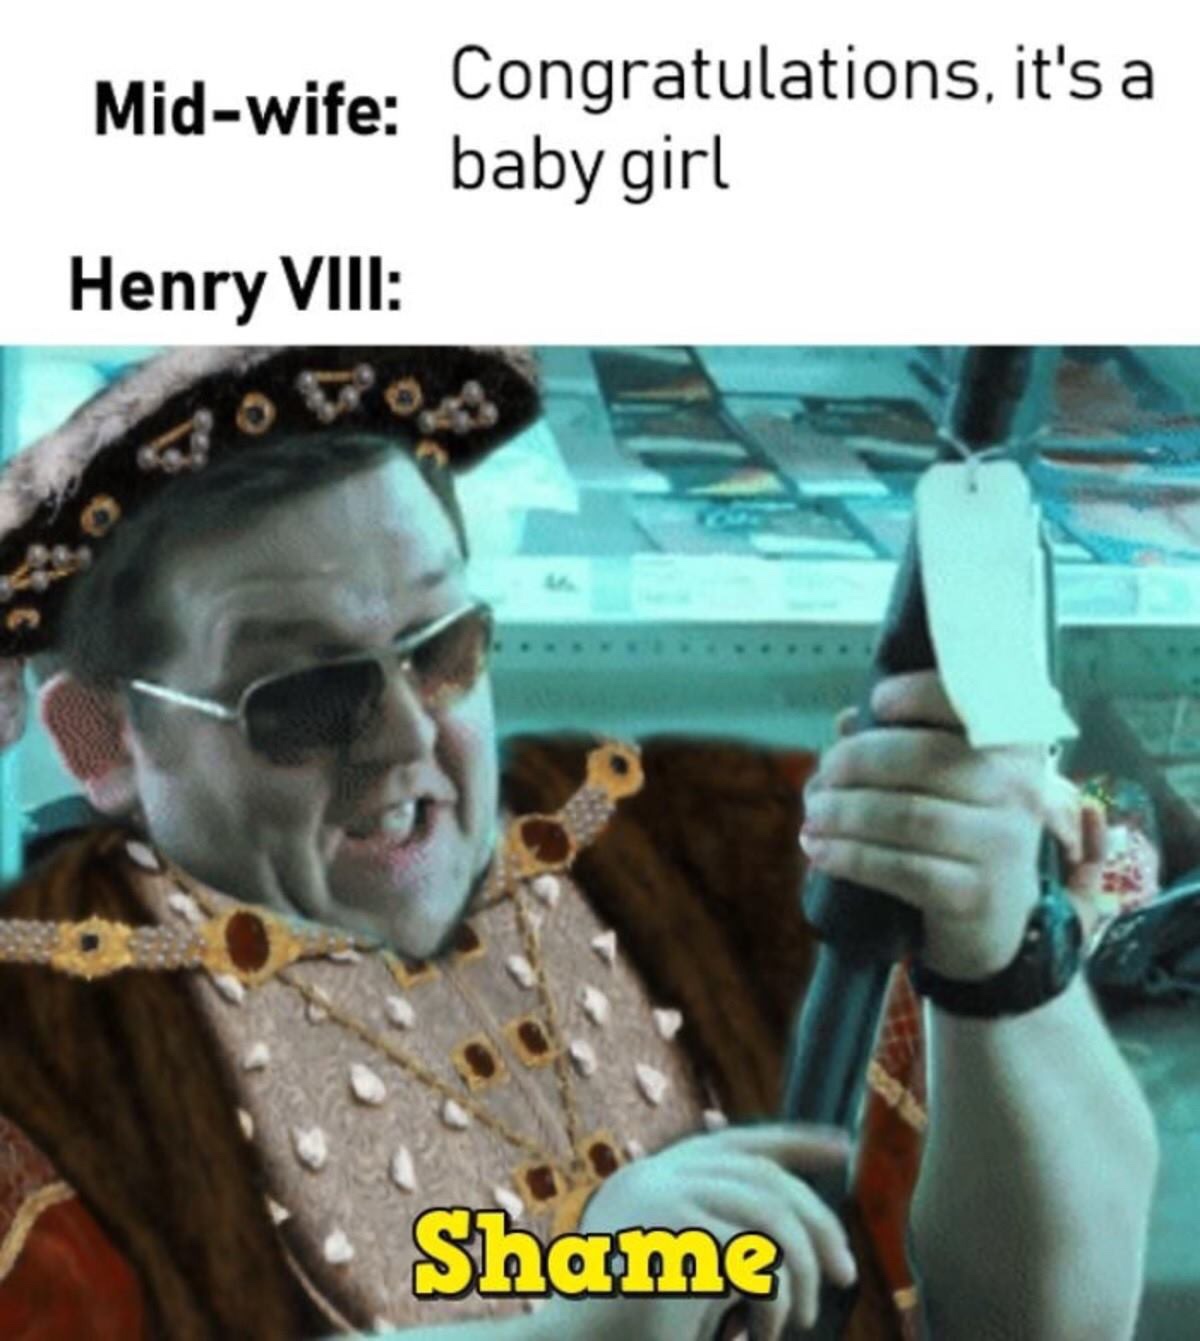 henry viii shame meme - Midwife Congratulations, it's a baby girl Henry Viii Shame